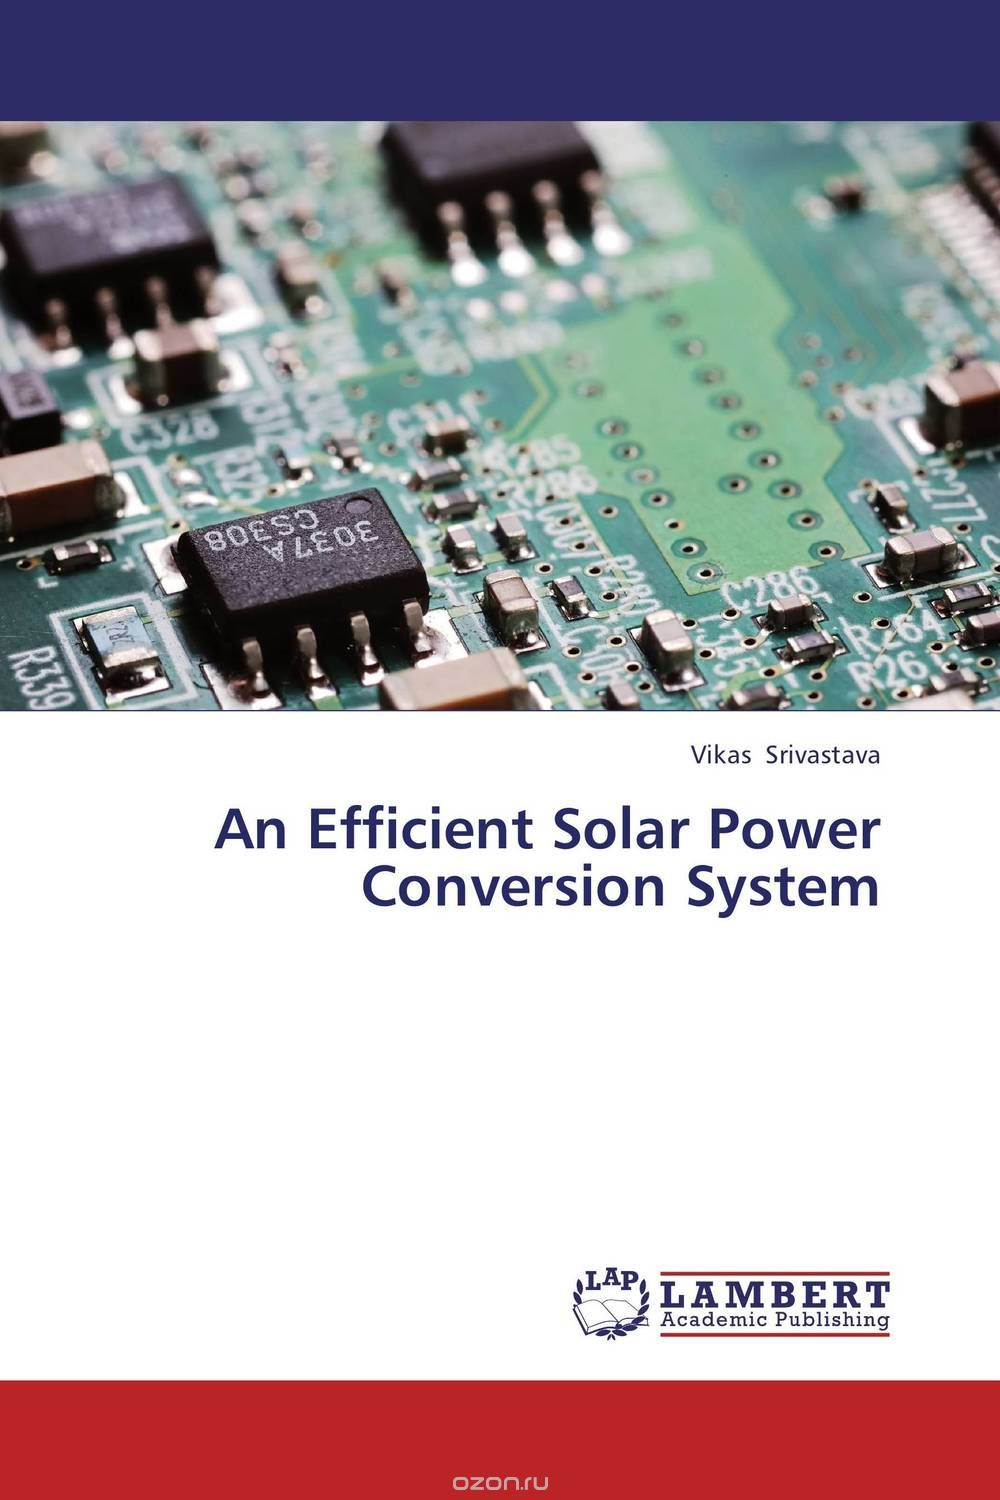 An Efficient Solar Power Conversion System